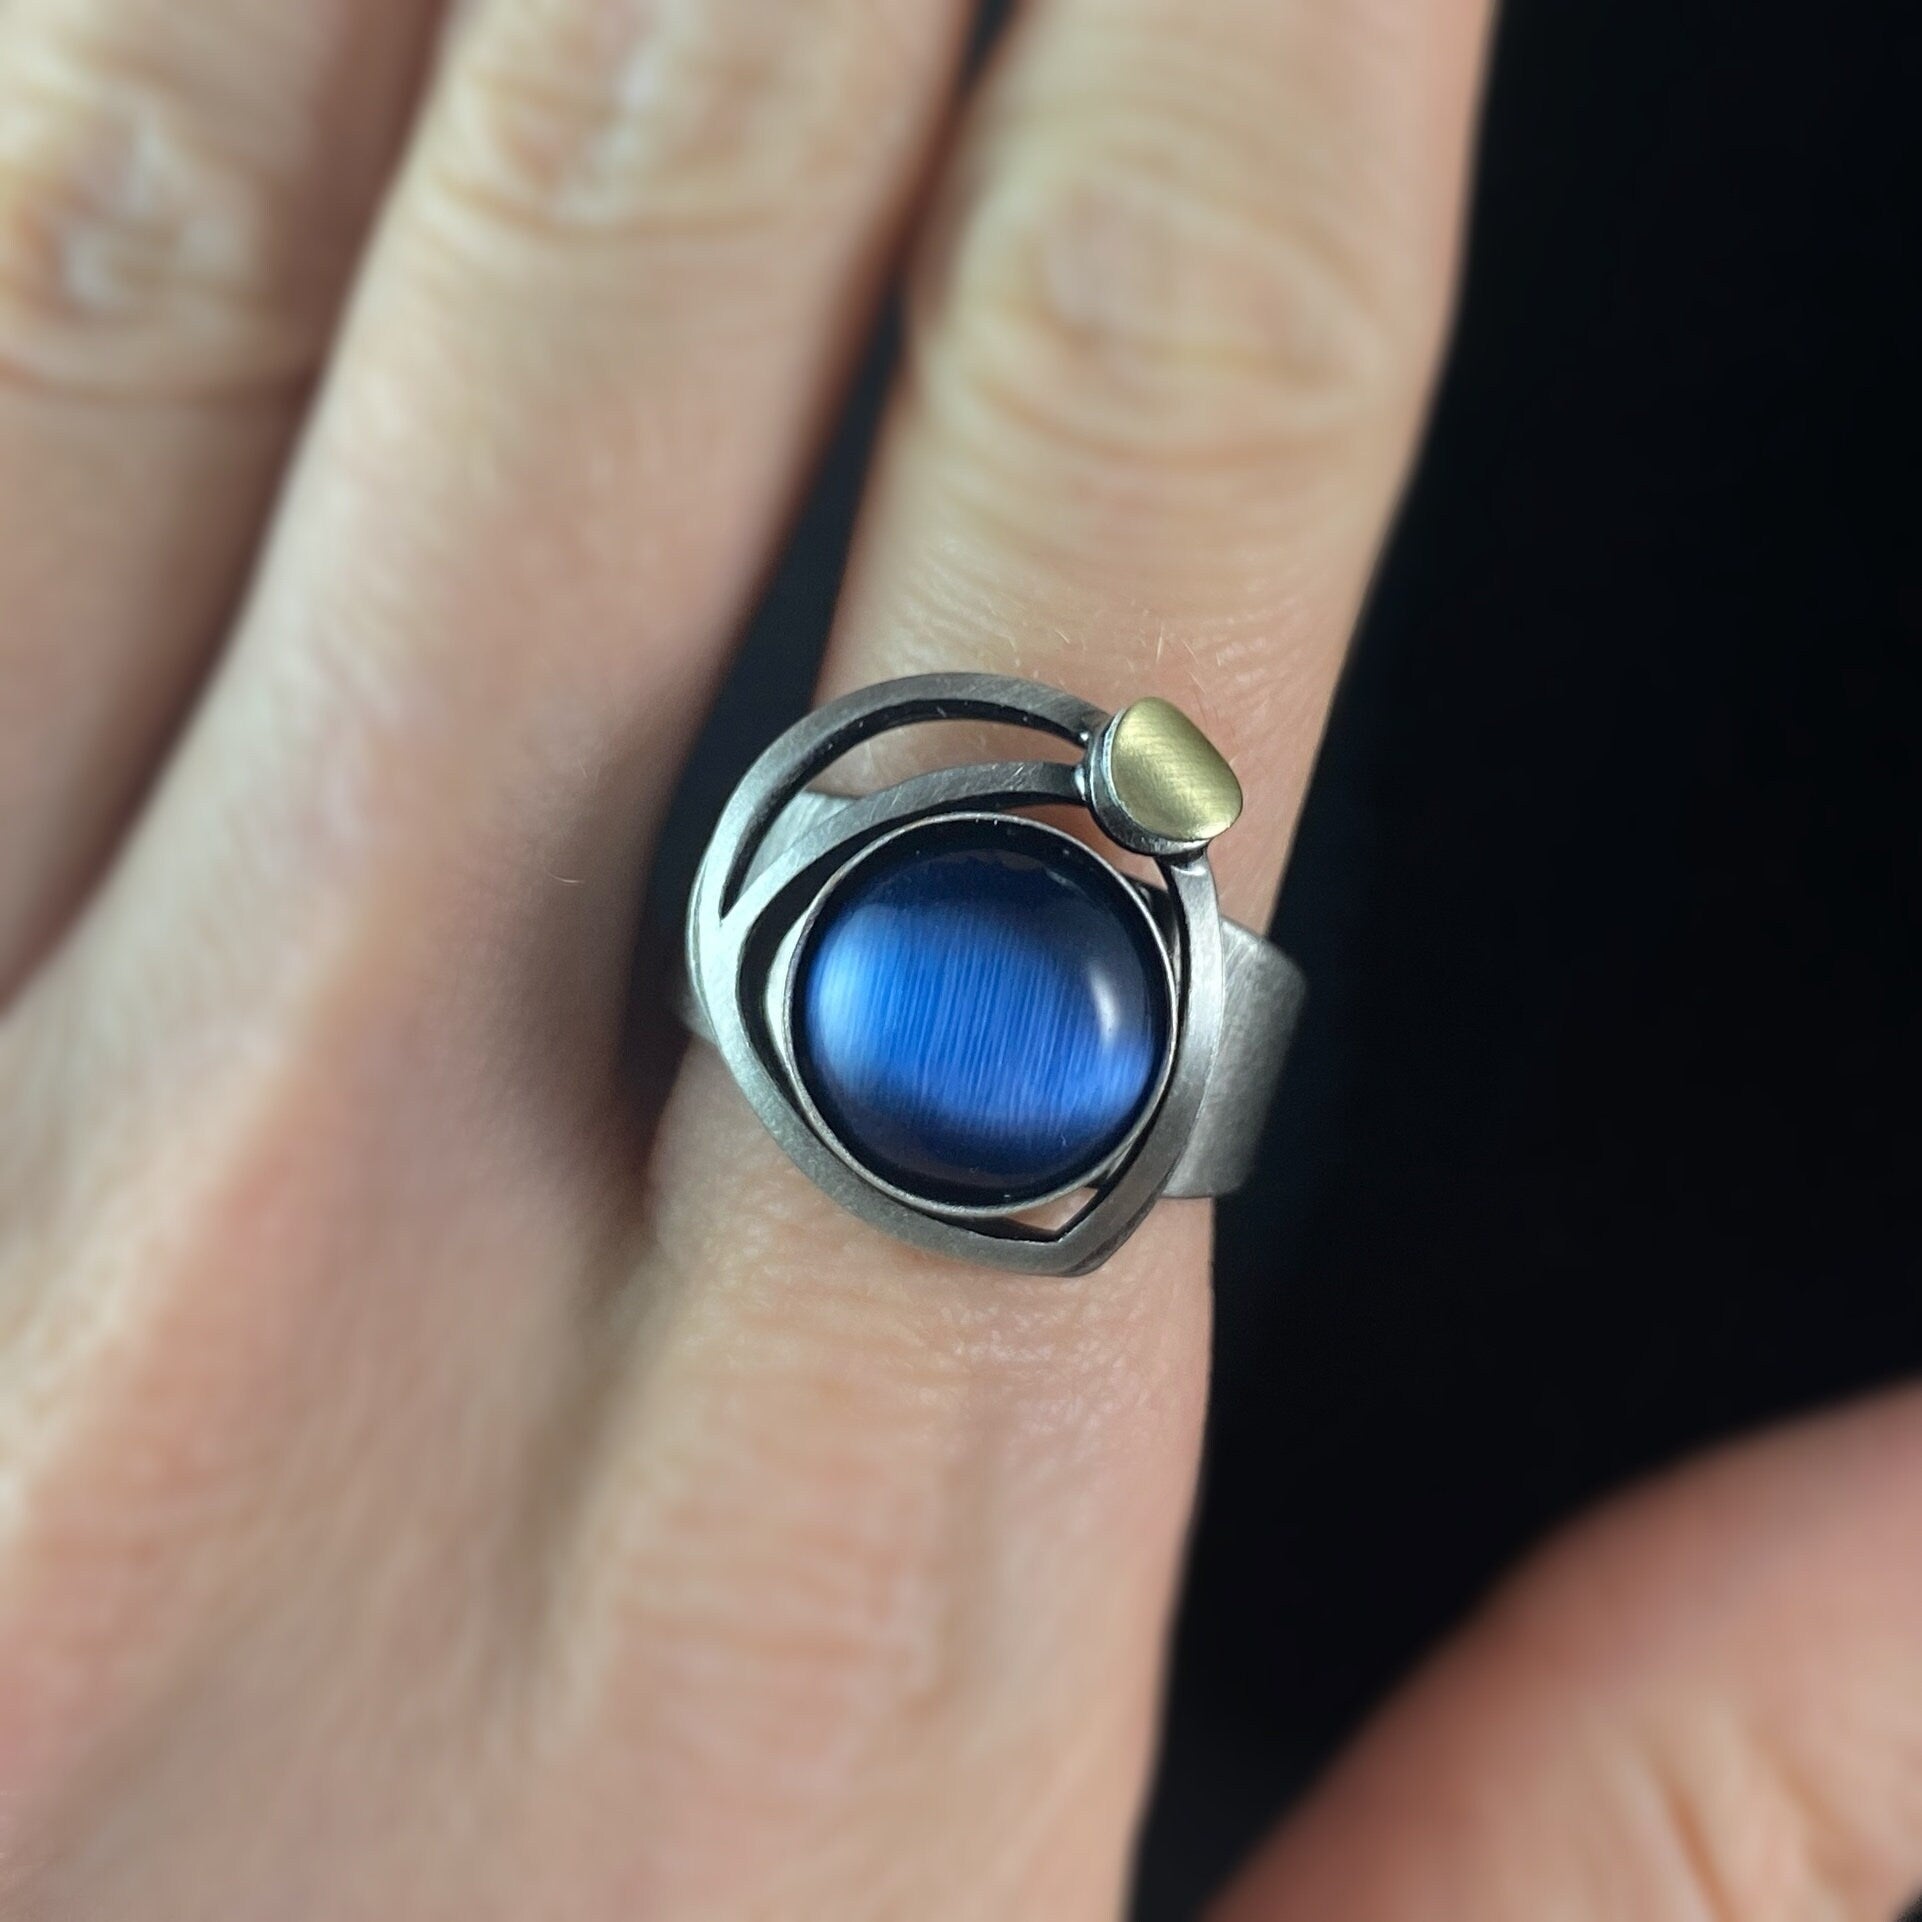 Lightweight Handmade Geometric Aluminum Ring, Blue Moon